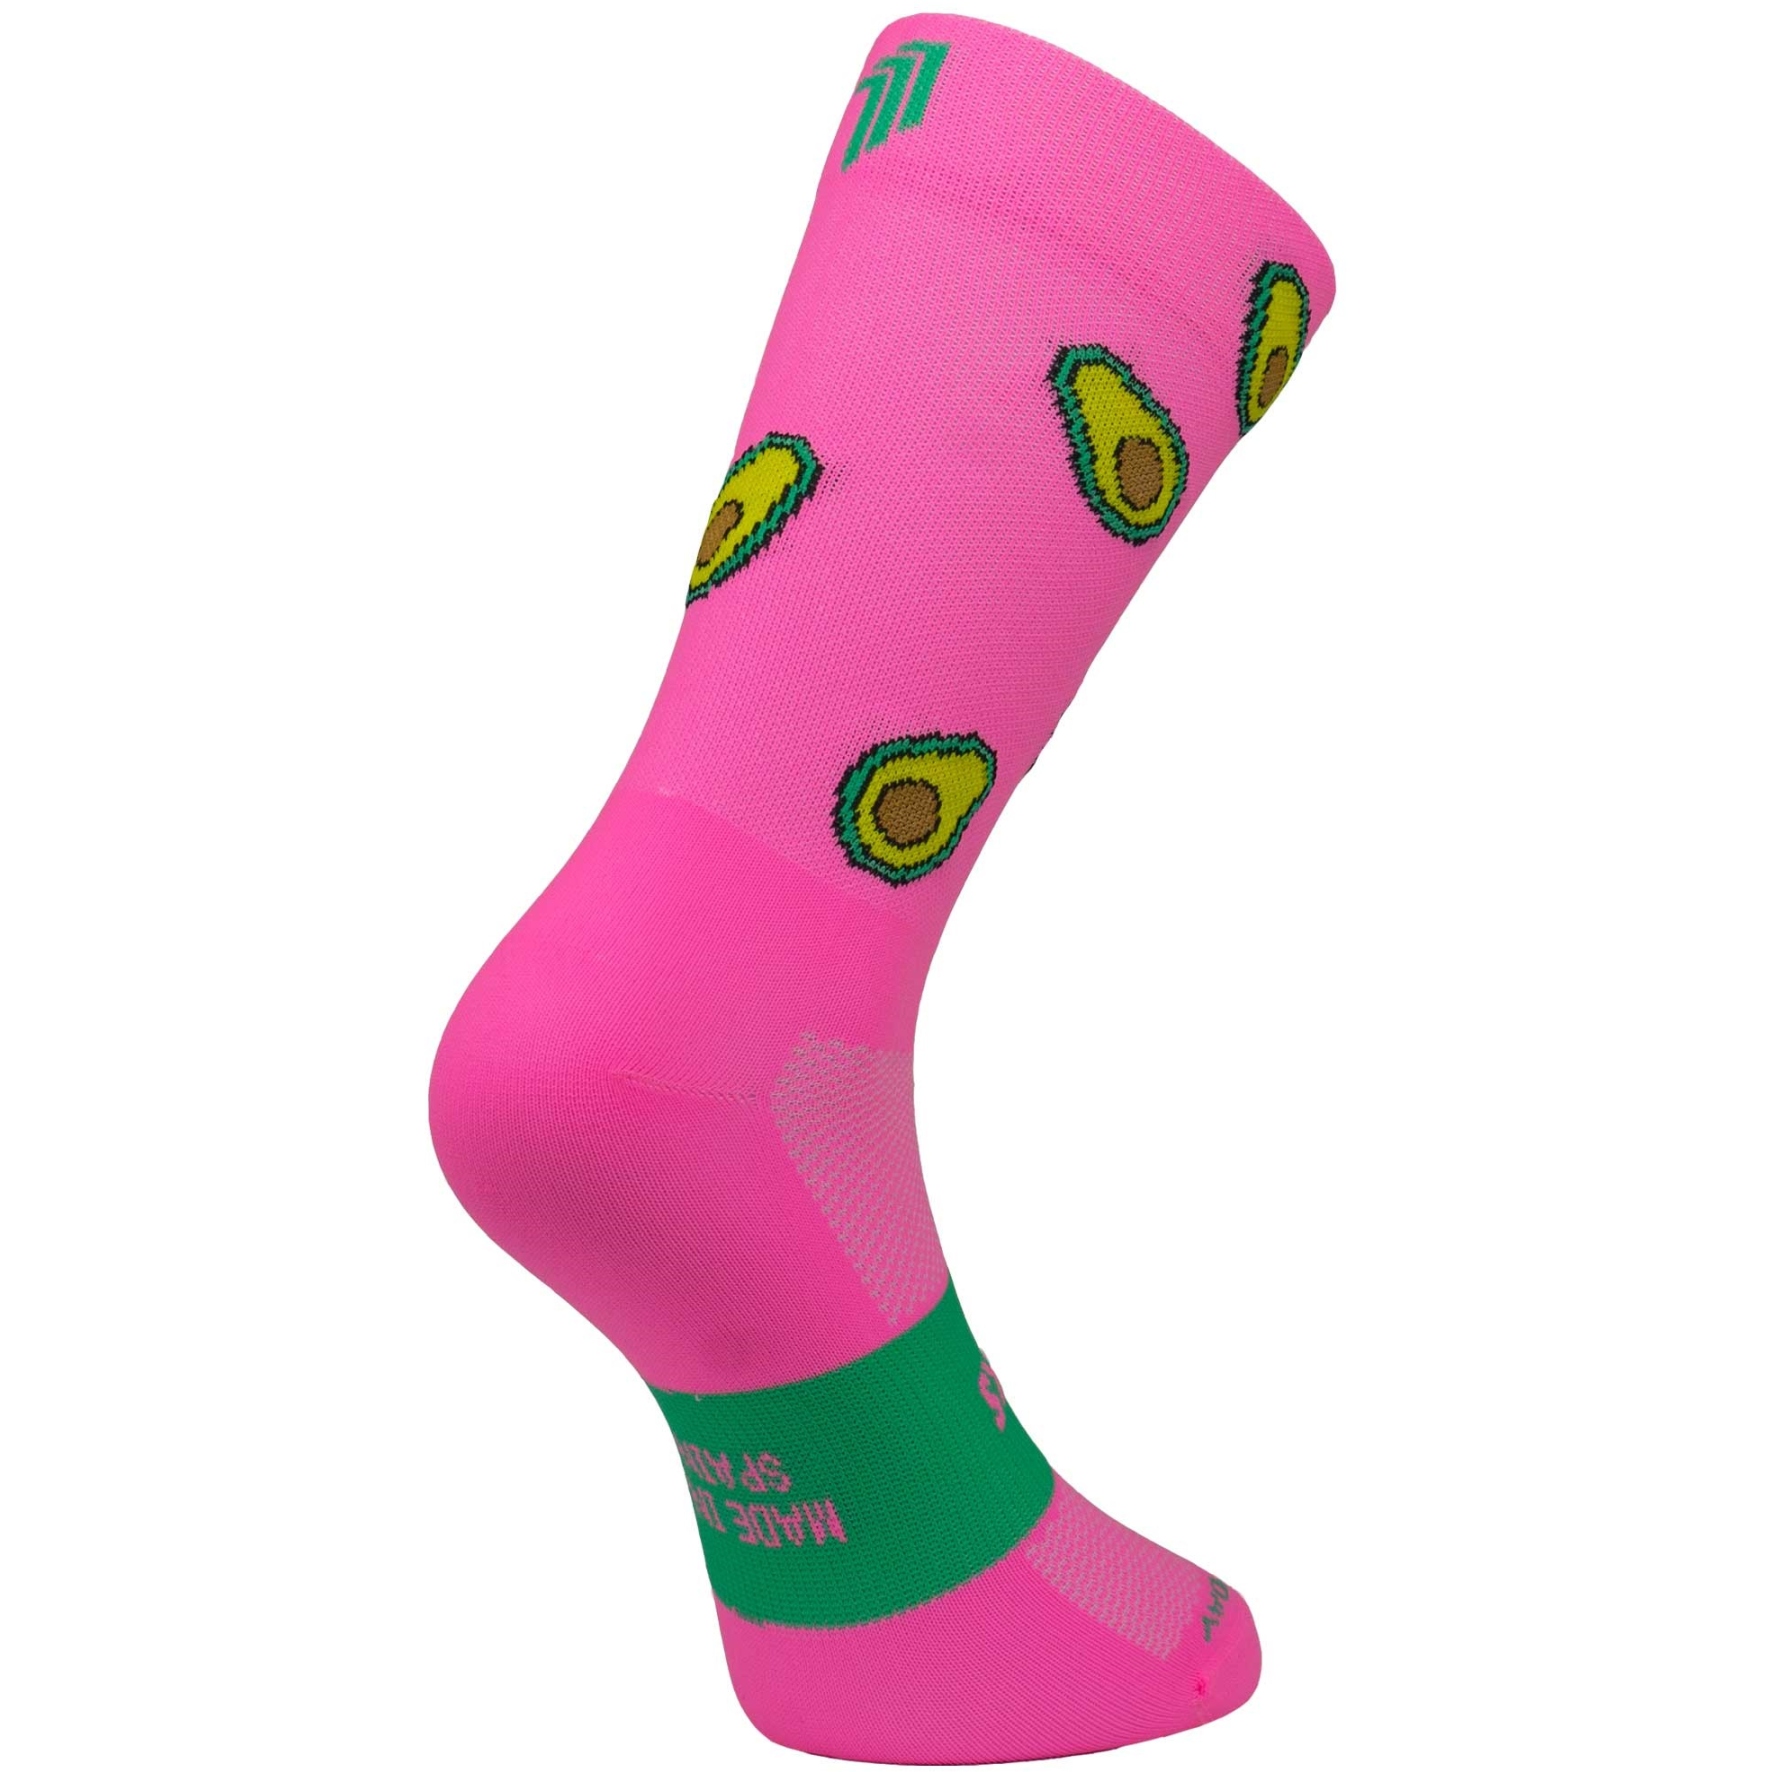 Productfoto van SPORCKS Cycling Socks - Avocados